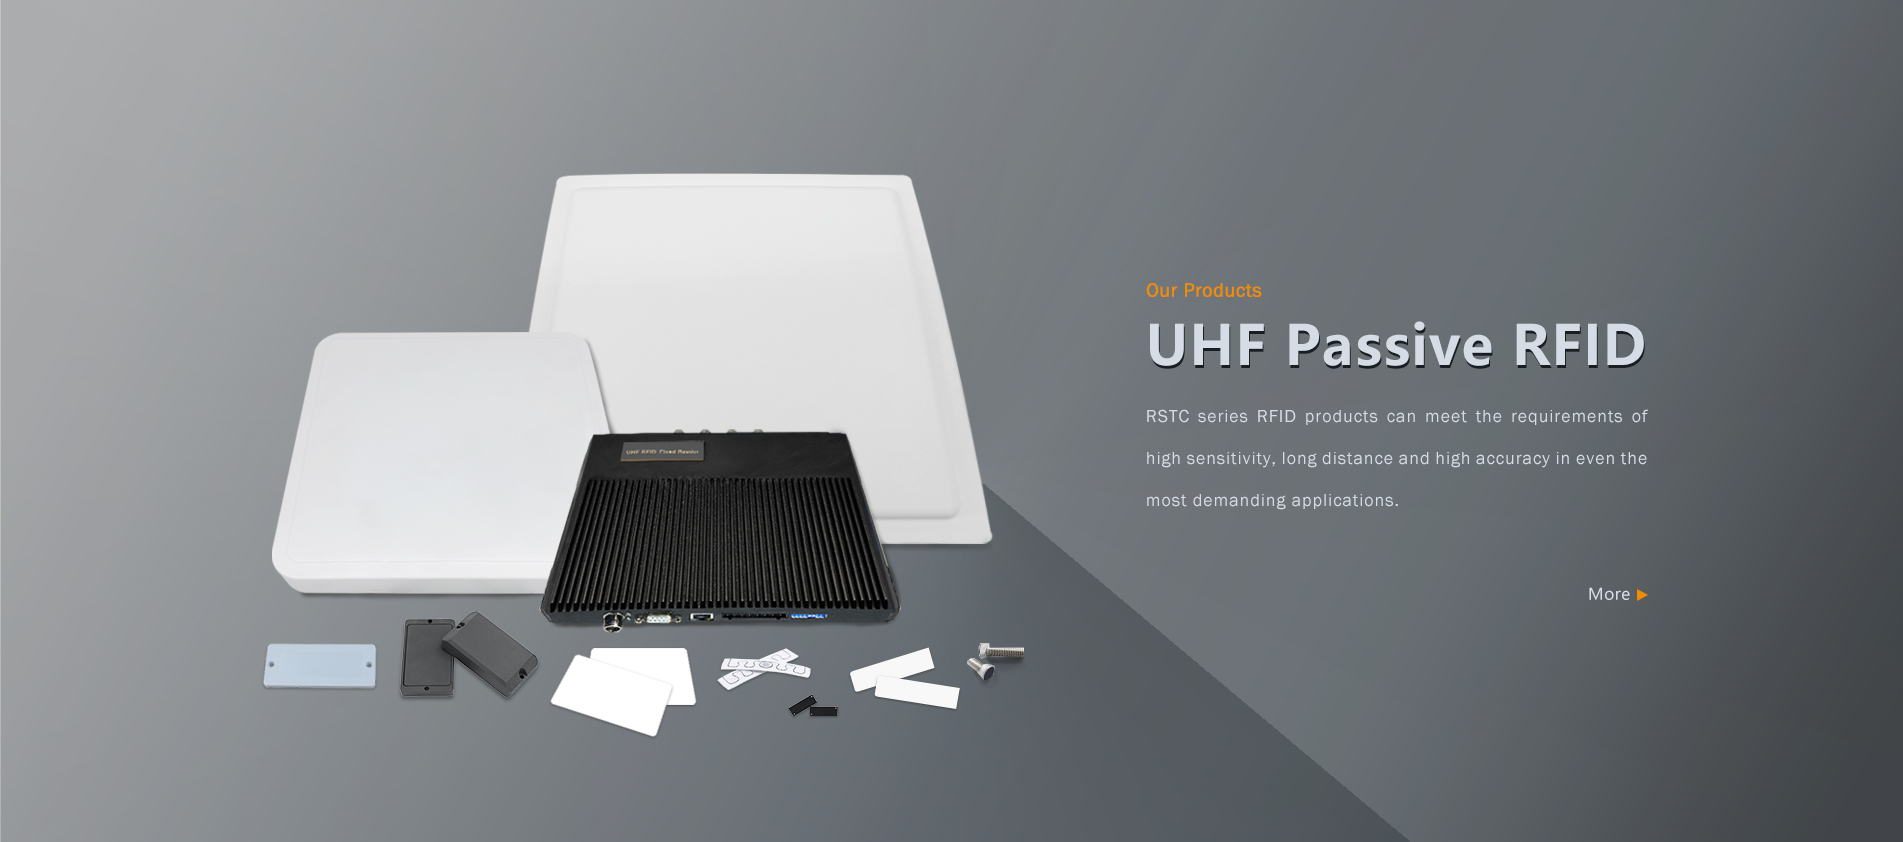 UHF Passive RFID